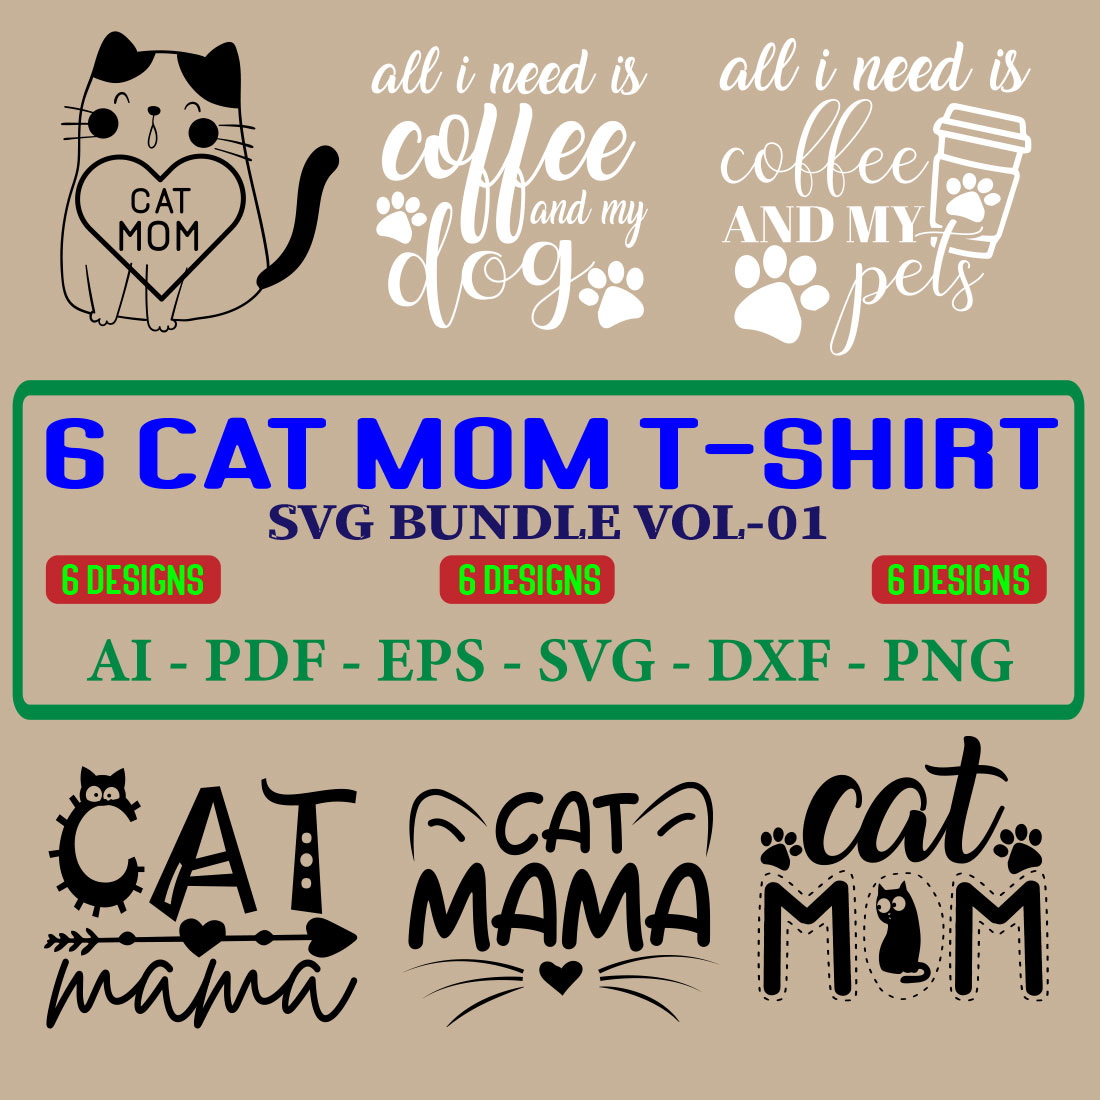 6 Cat Mom T-shirt SVG Bundle Vol-01 cover image.